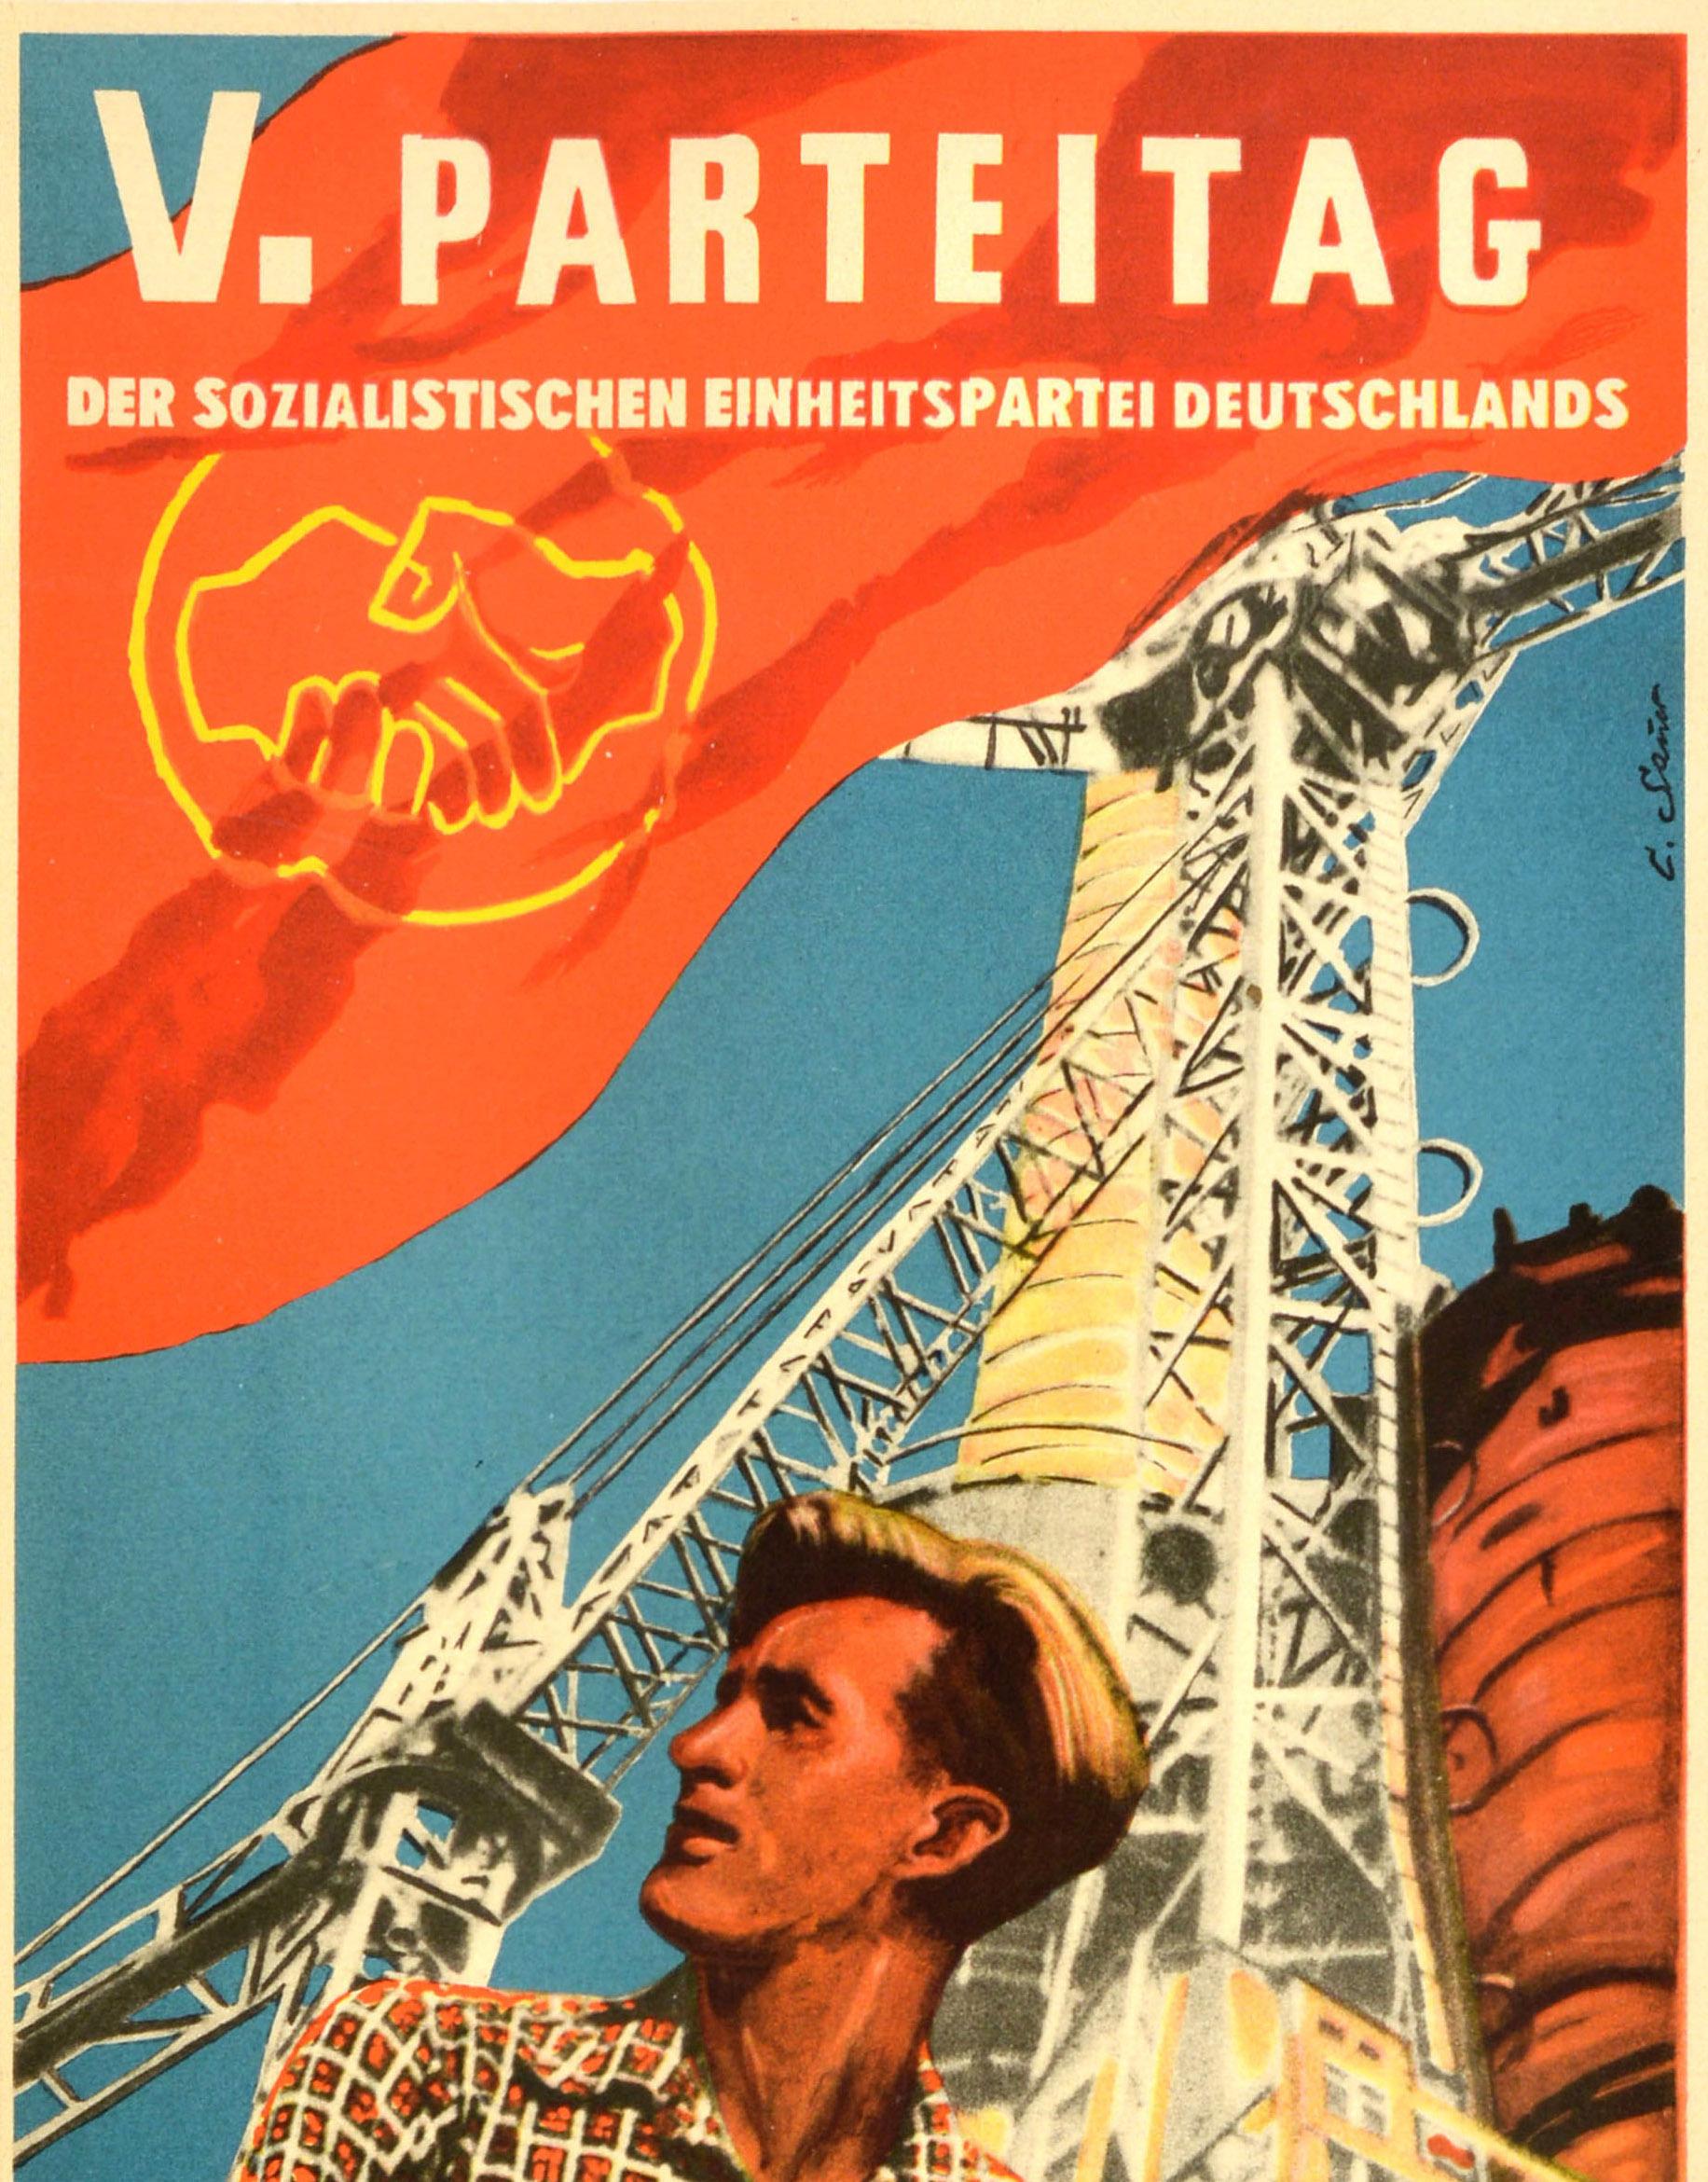 Original vintage political propaganda poster - V Parteitag Der Sozialistischen Einheitspartei Deutschlands Der Sozialismus Siegt / 5th Party Congress of the Socialist Unity Party of Germany Socialism Wins - featuring an industrial image showing a